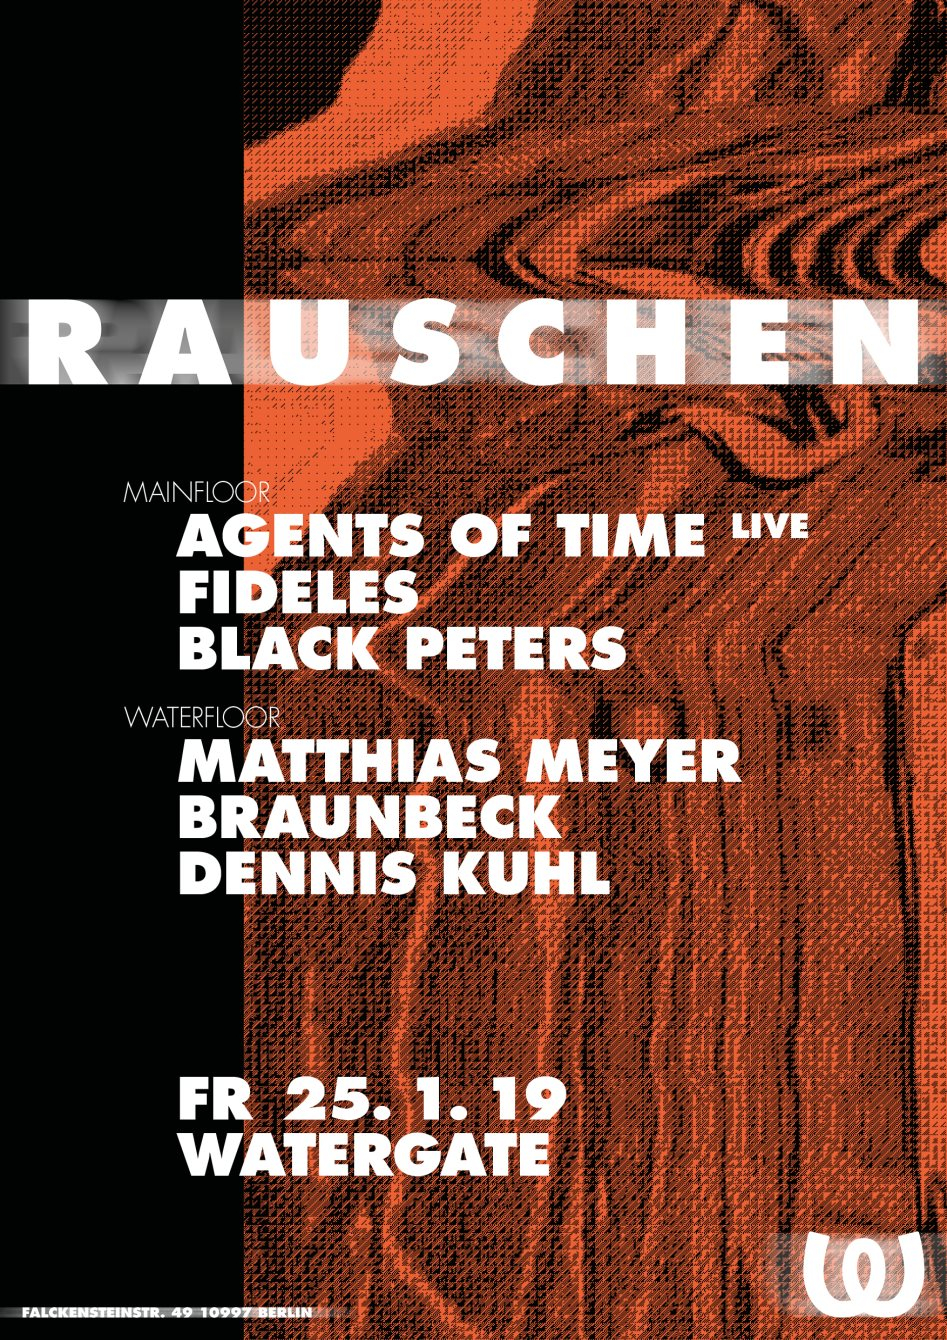 Rauschen: Agents Of Time, Fideles, Black Peters, Matthias Meyer, Braunbeck, Dennis Kuhl - Flyer front